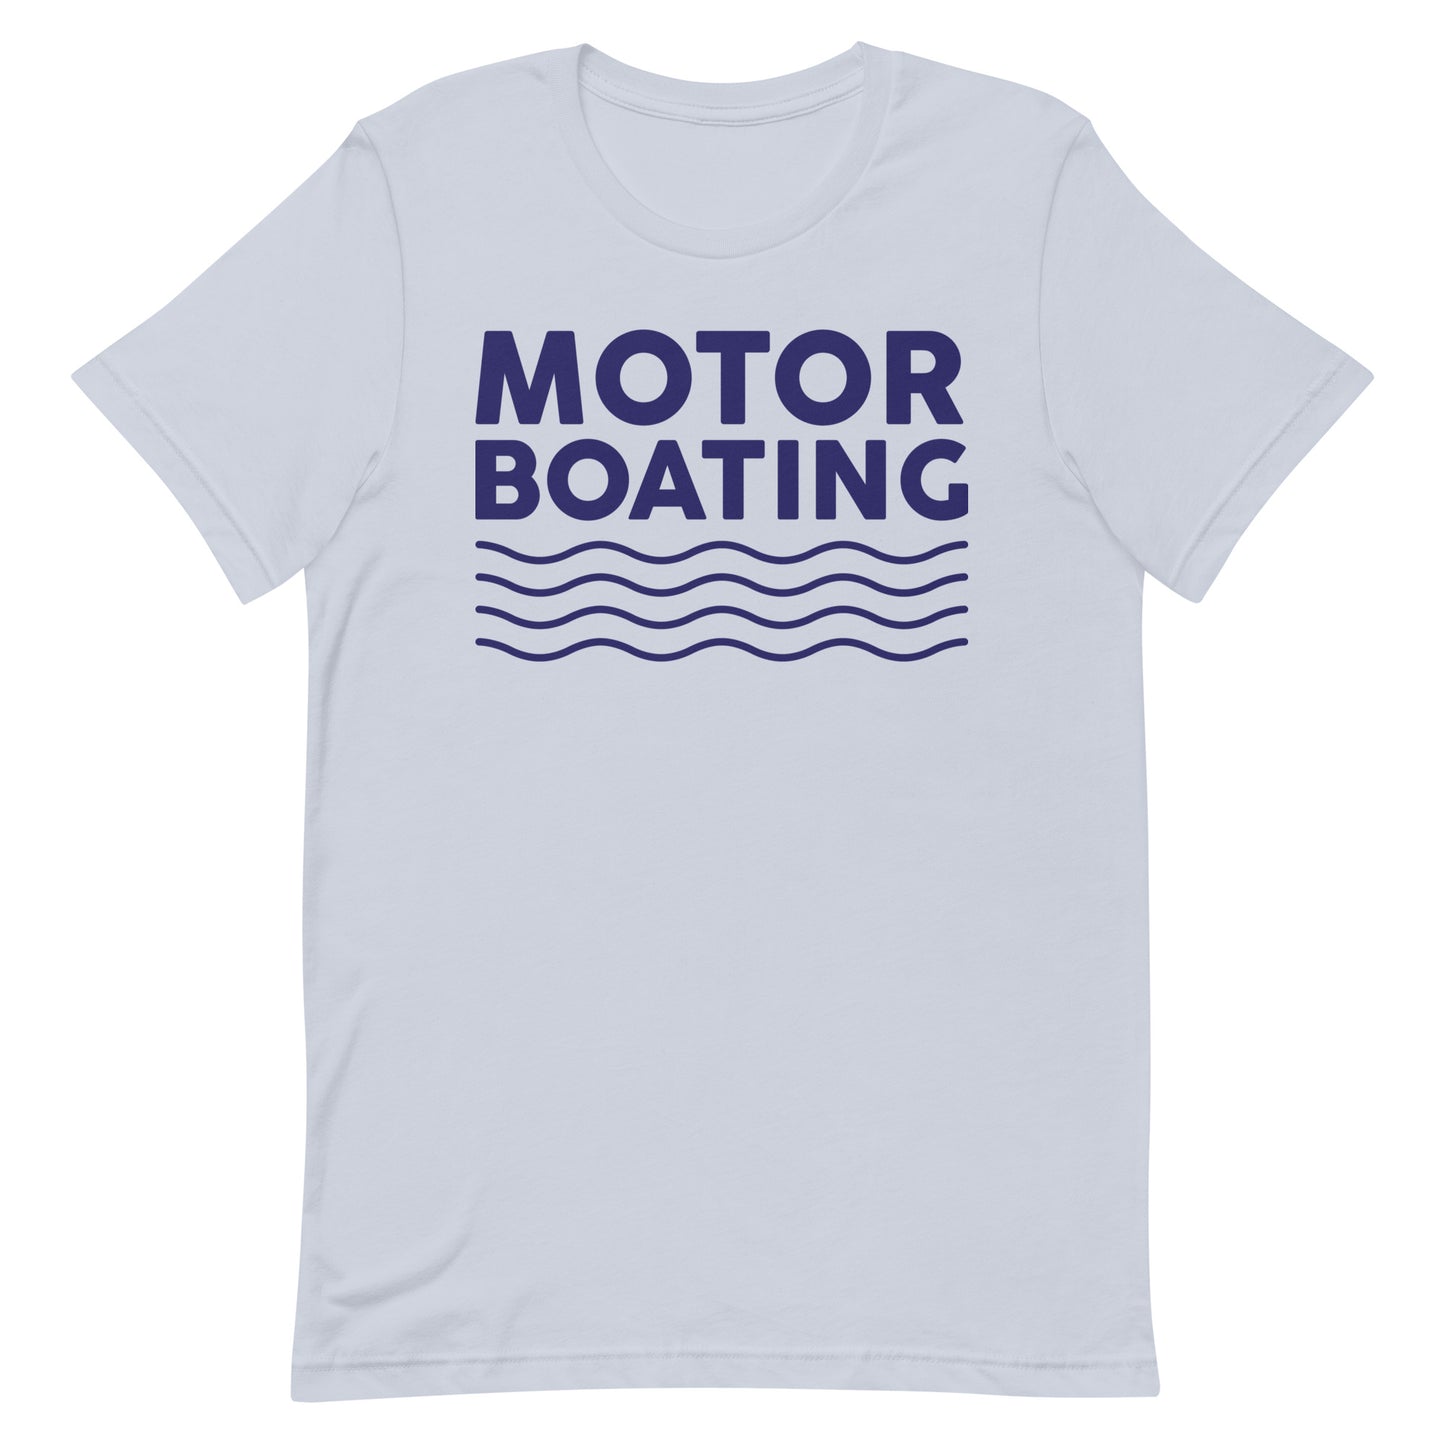 Motor Boating Tee